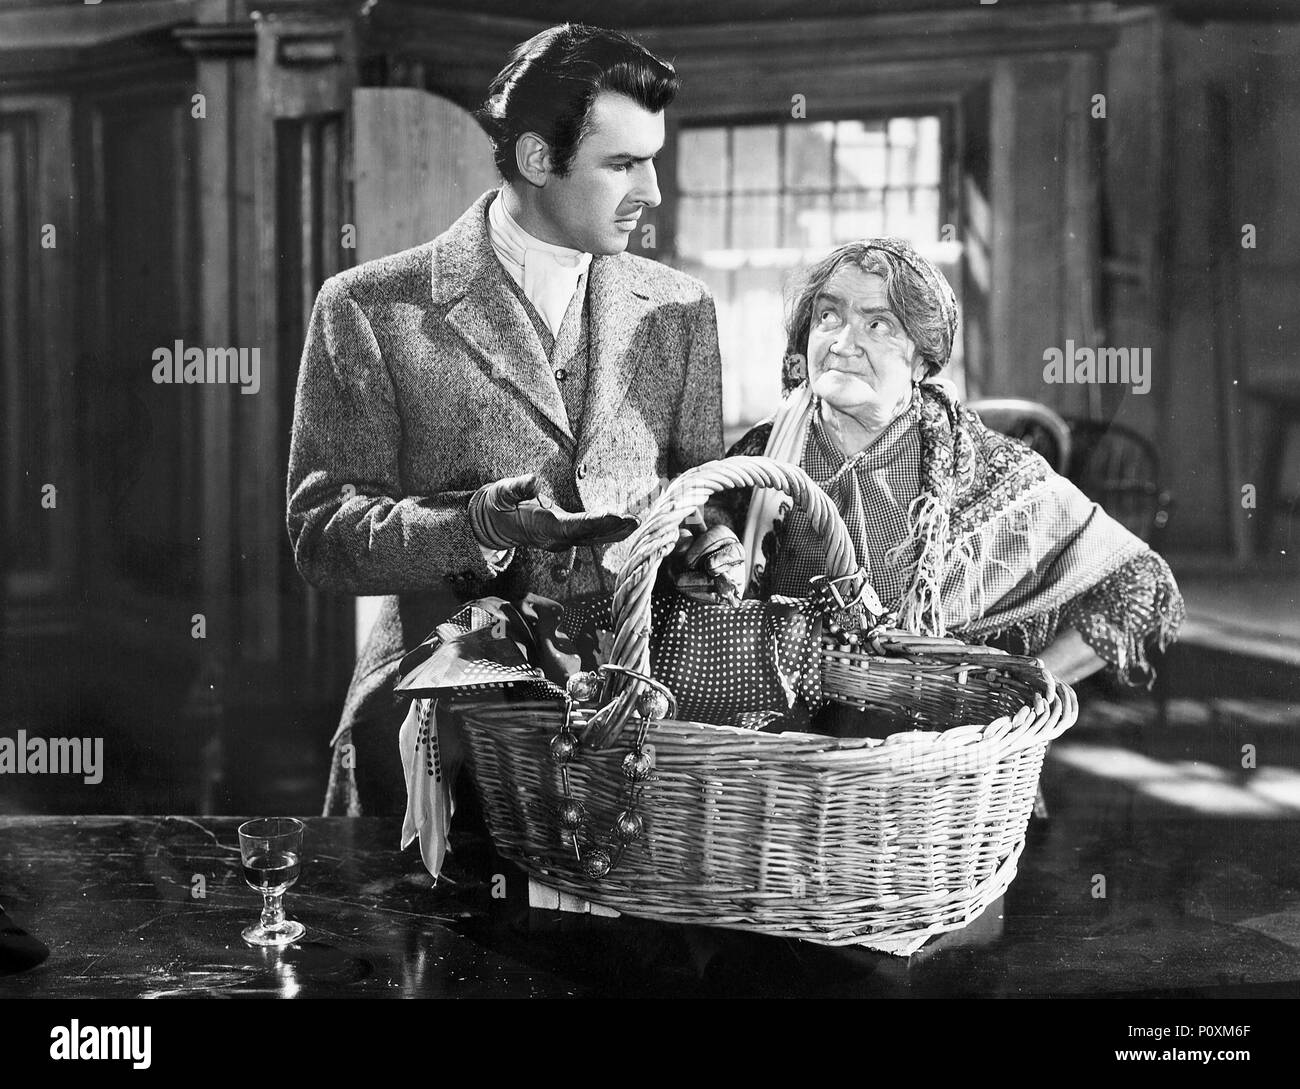 Original Film Title: BLANCHE FURY. English Title: BLANCHE FURY. Film  Director: MARC ALLEGRET. Year: 1948. Stars: STEWART GRANGER. Credit:  CINEGUILD / Album Stock Photo - Alamy